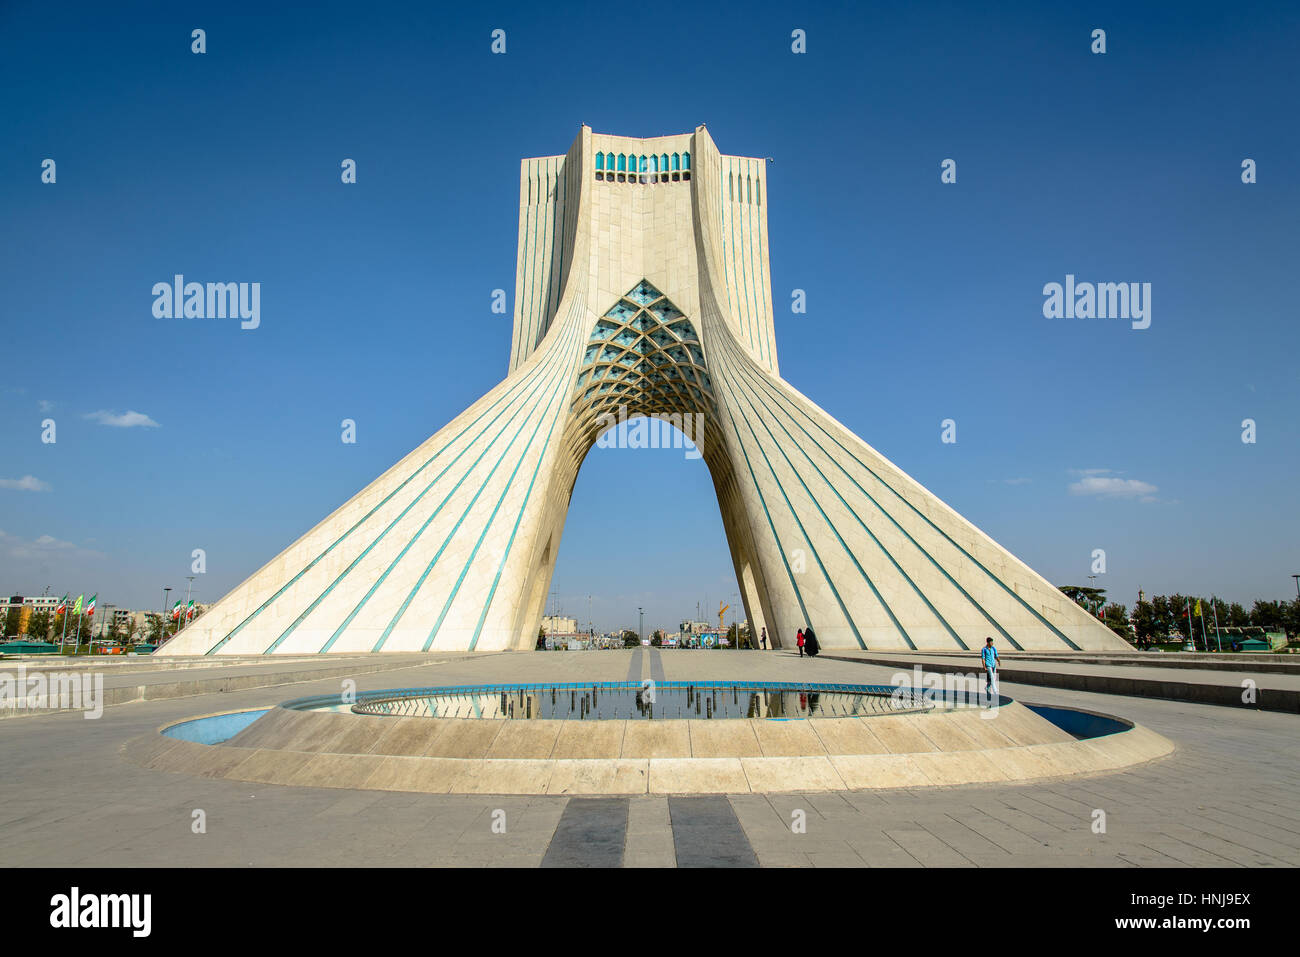 TEHRAN, IRAN - OCTOBER 02, 2014: Azadi Tower in the iranian capital Tehran Stock Photo